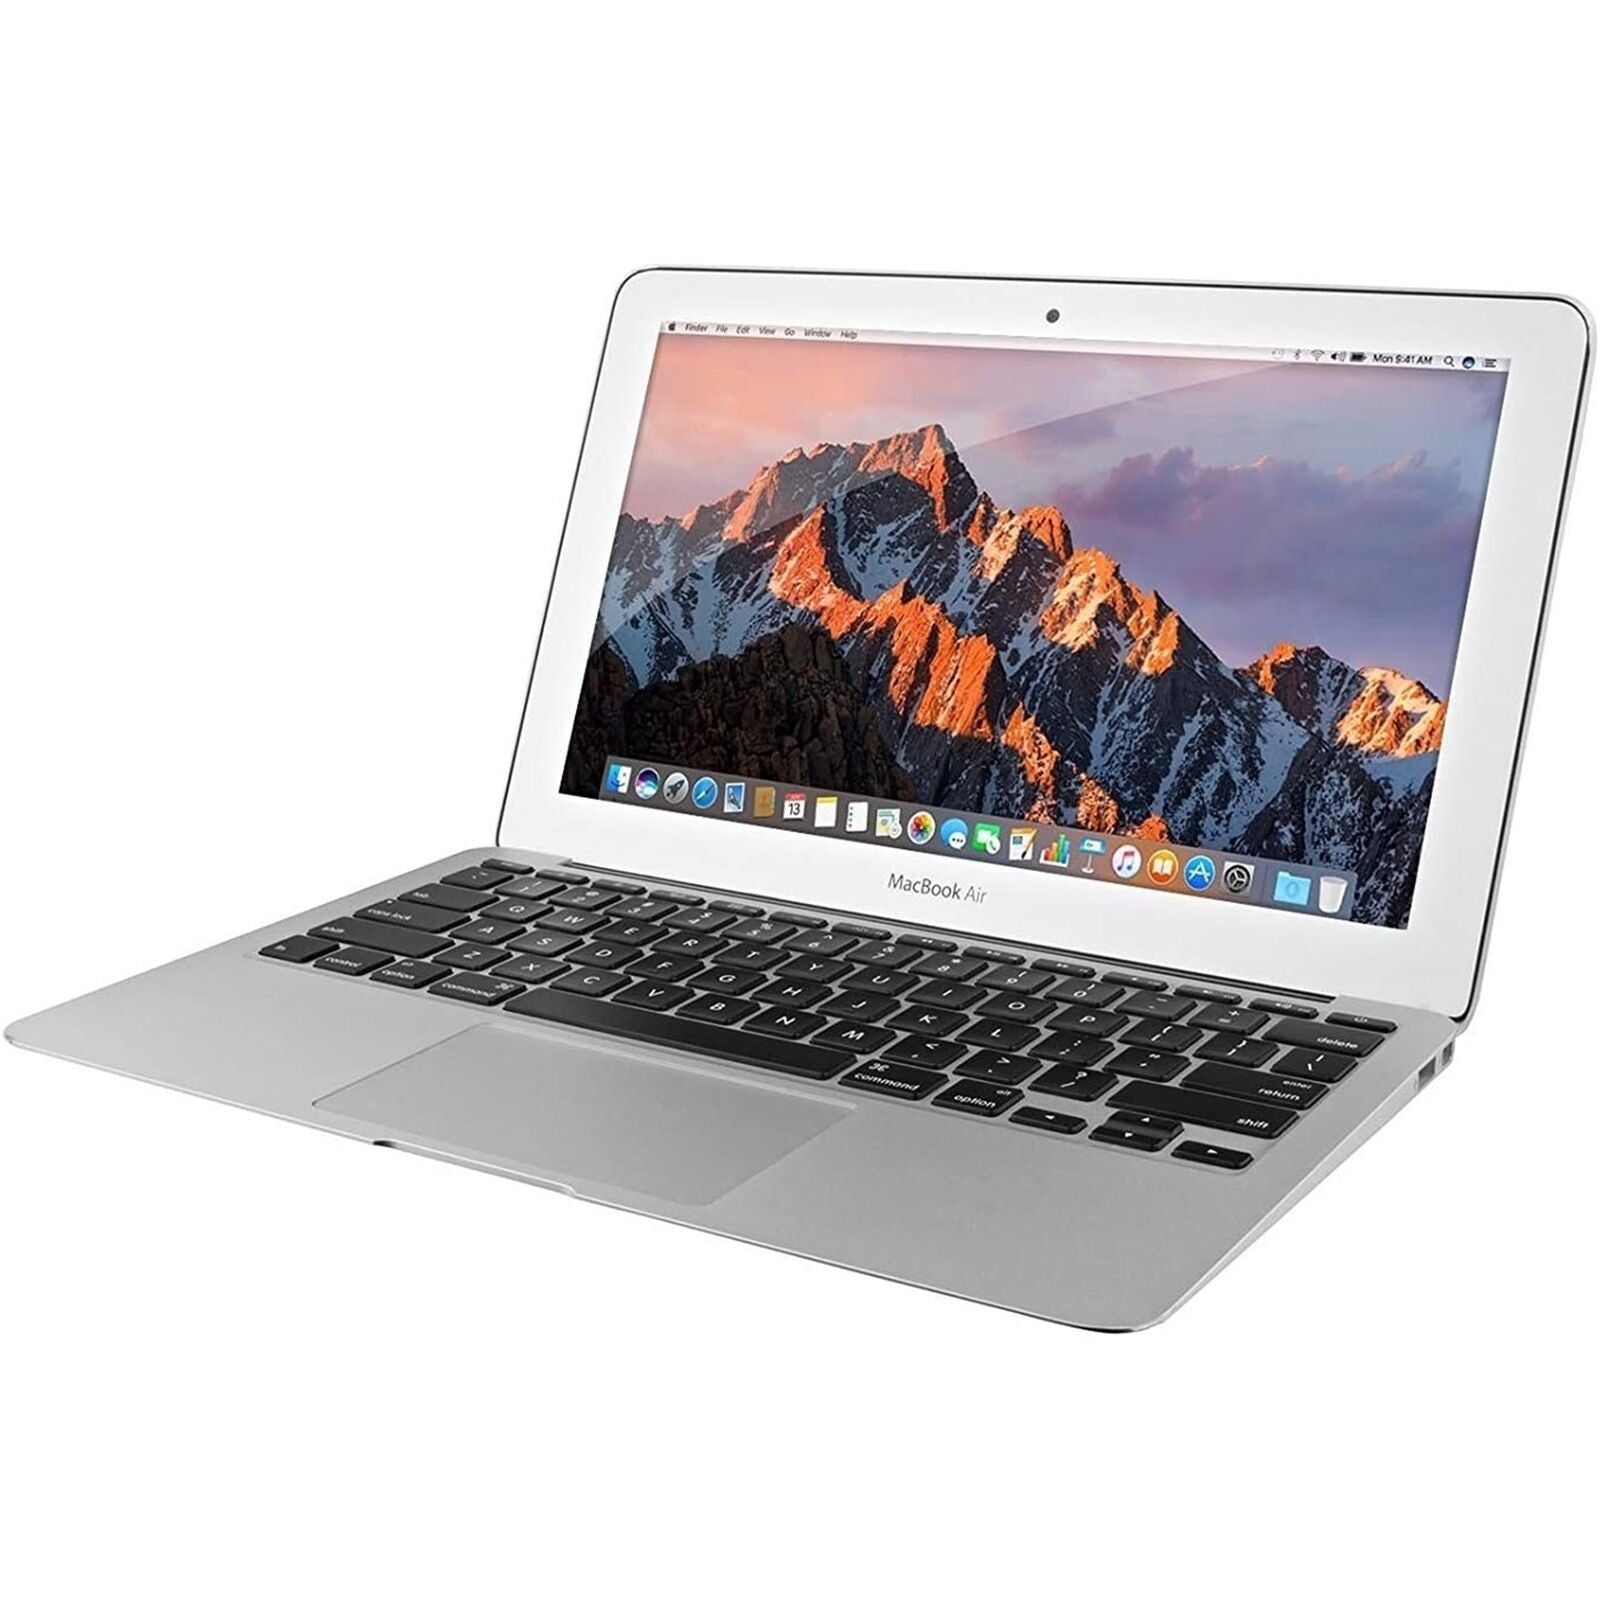 Apple Aluminum MacBook Air, 11.6, Laptop, Model: MJVM2LL/A CPU: DCi5-5250U 1.6GHz, RAM: 4GB, Storage: 128GB Flash, Color: Aluminum, GPU: Intel HD Grap